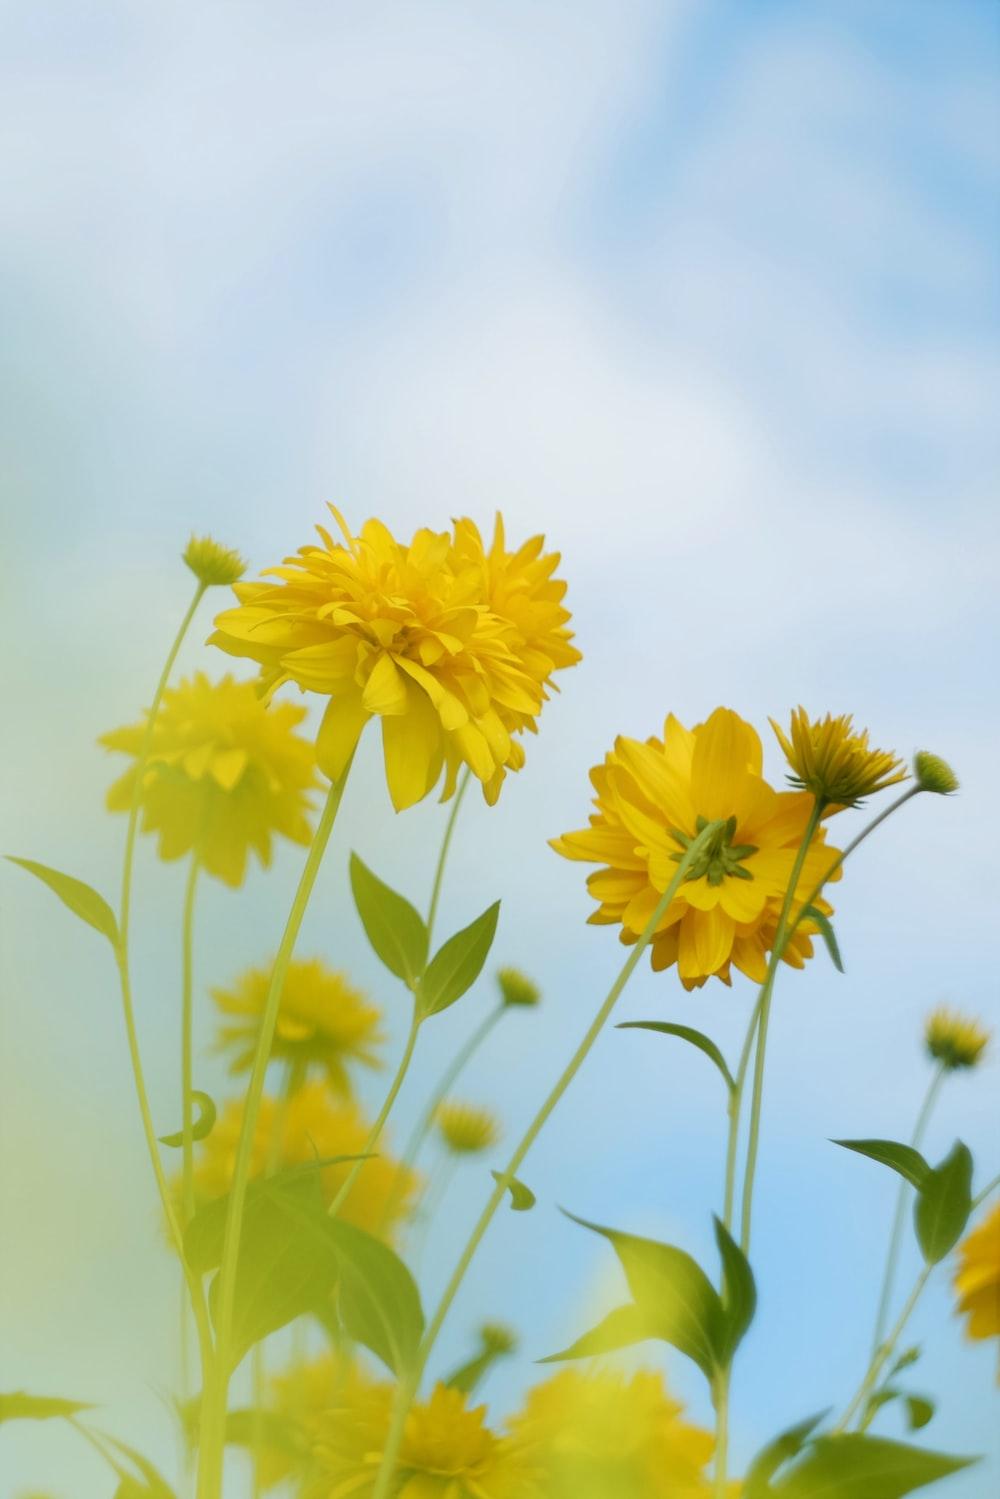 Yellow Flower Under Blue Sky During Daytime Photo